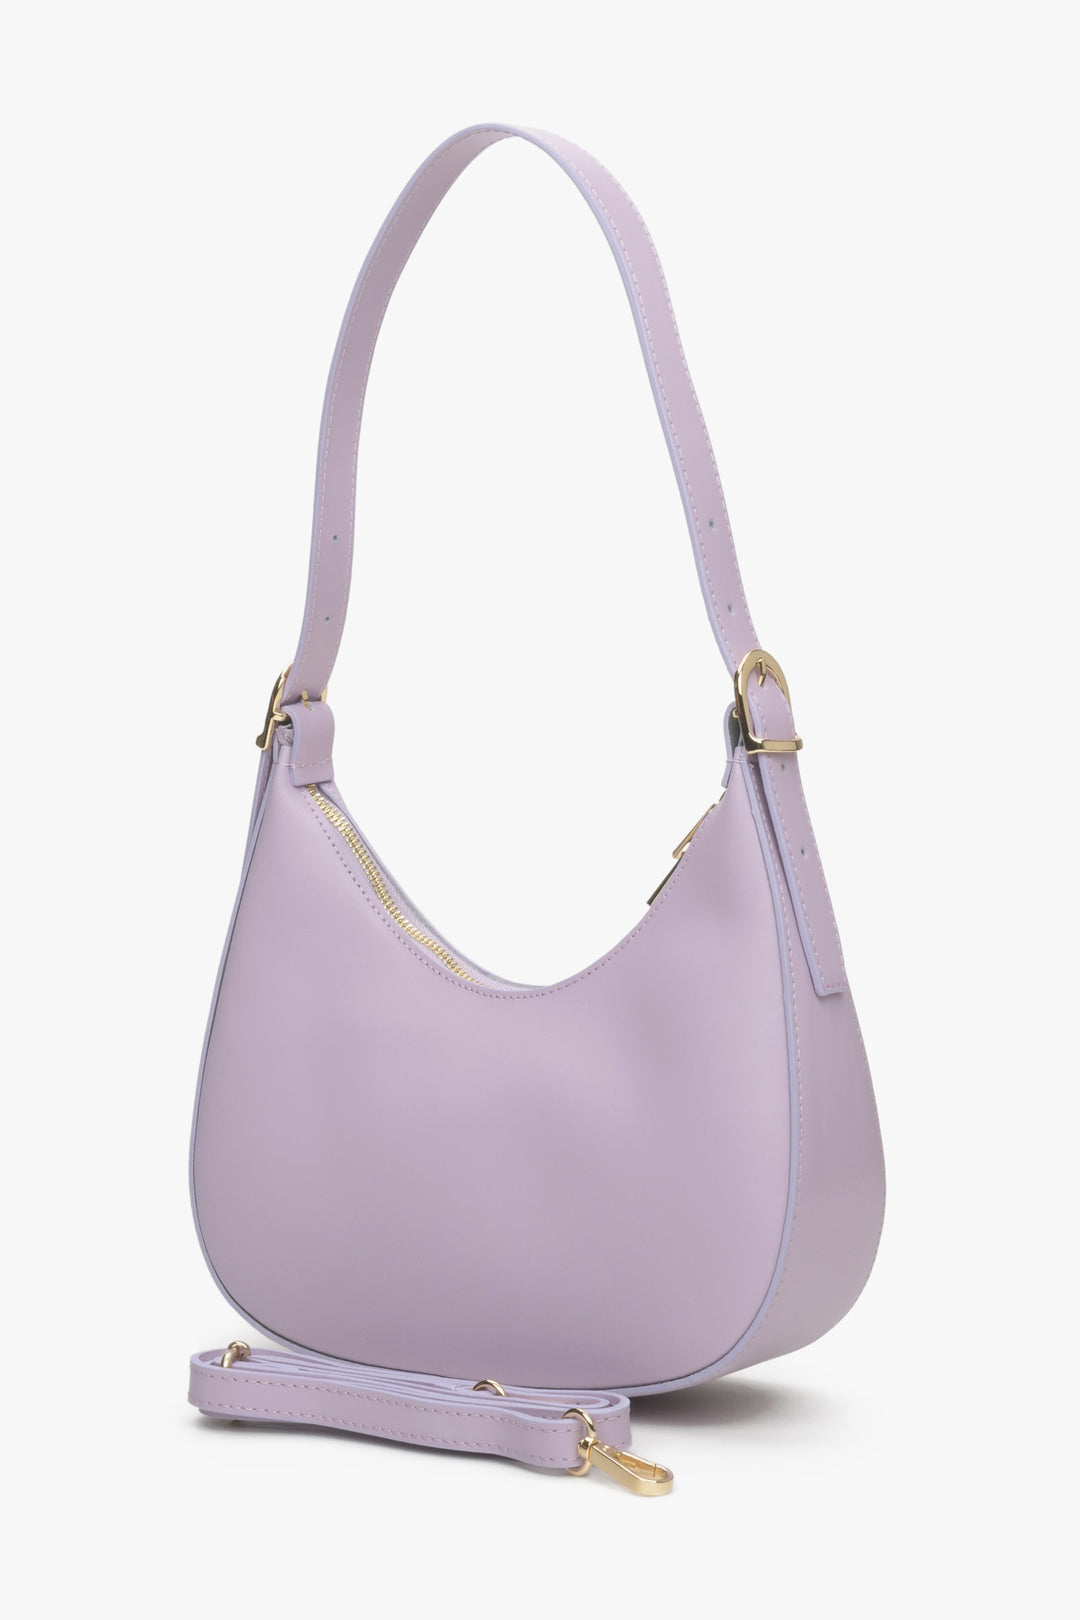 Women's purple handbag by Estro.